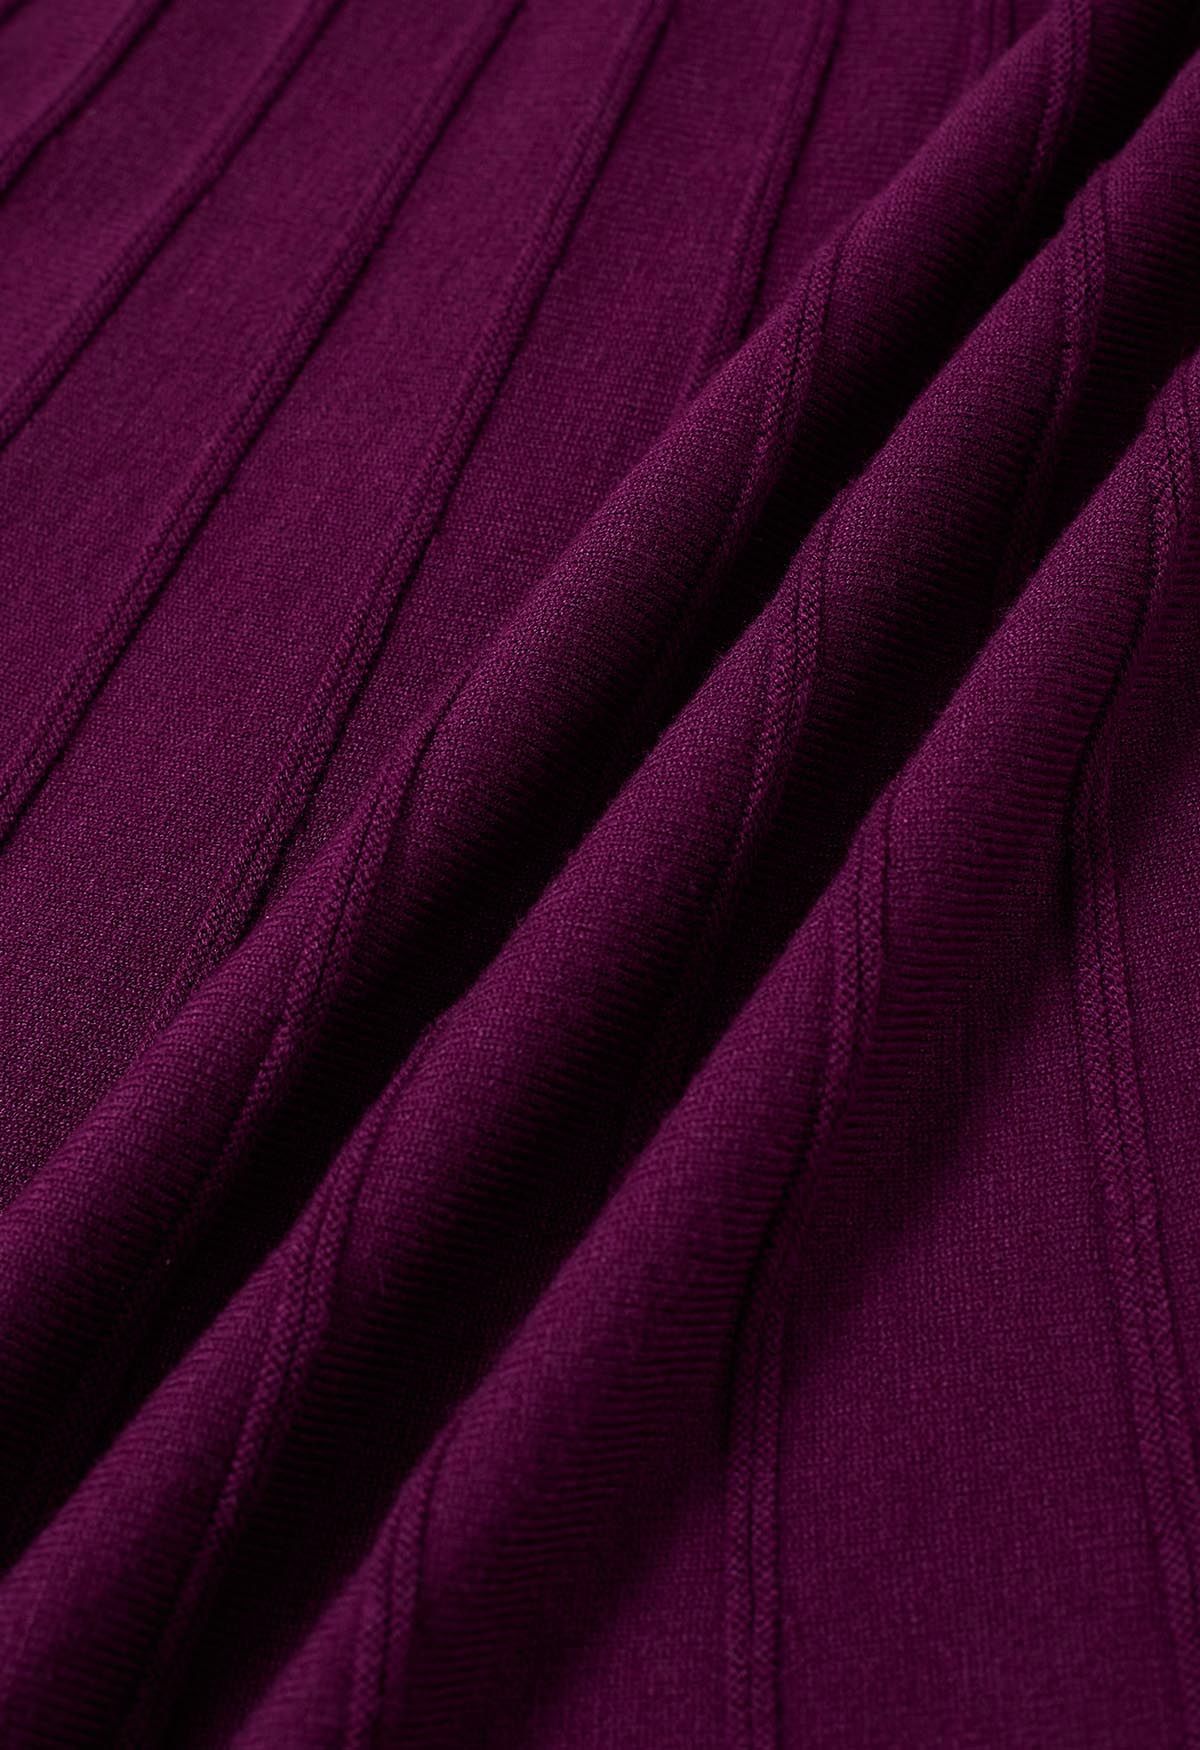 Silver Bead Embellished Seam Knit Midi Skirt in Purple